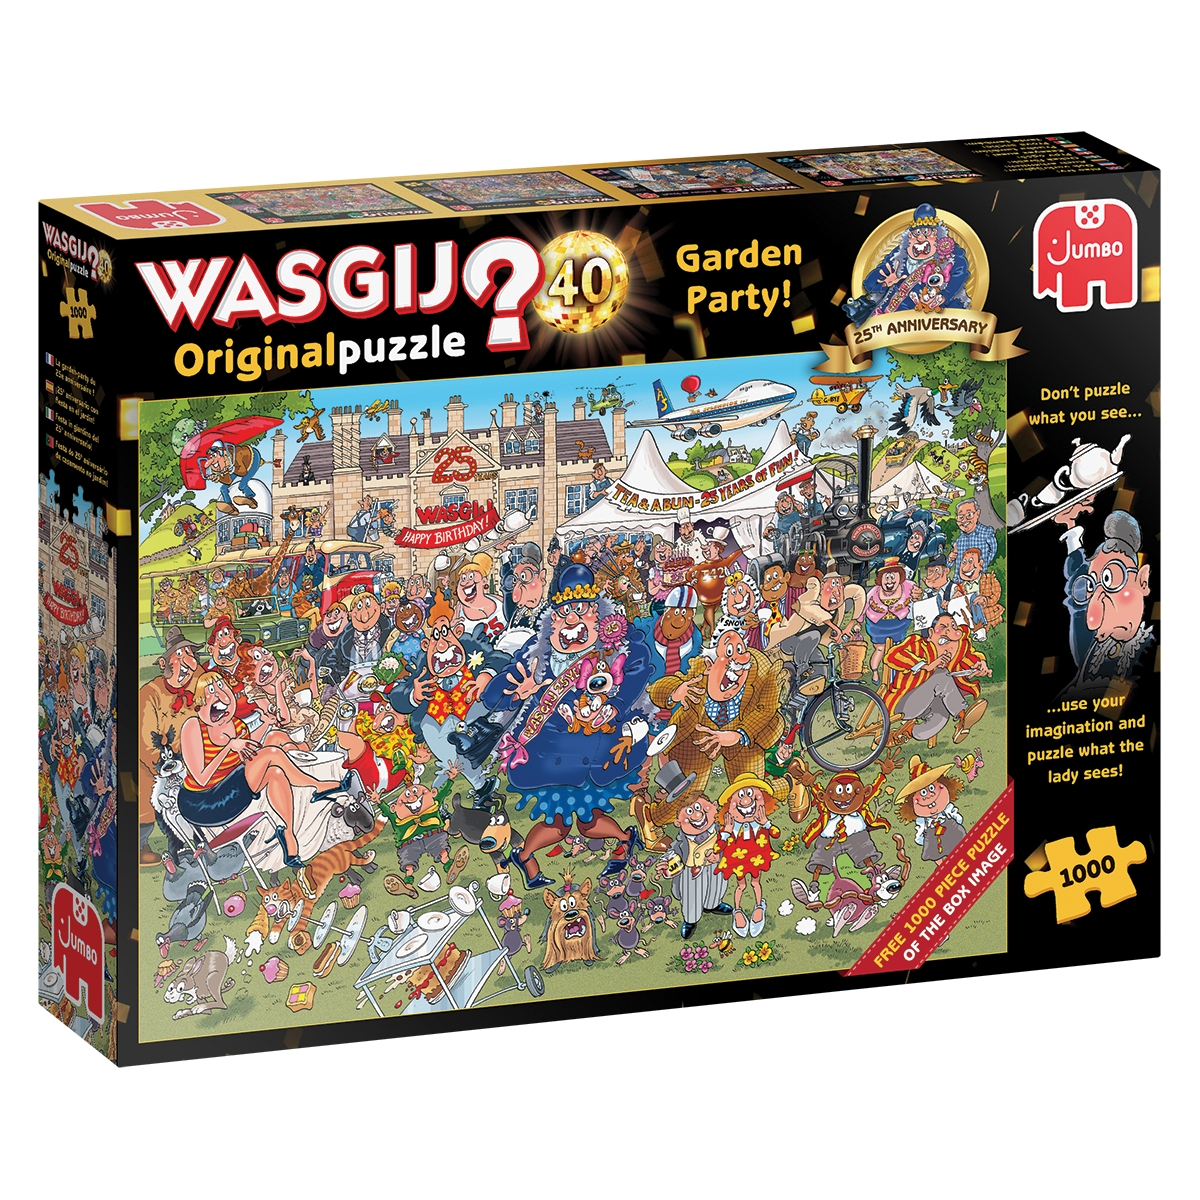 JUMBO Puzzle Wasgij Original 40 Stück) - Puzzle Gartenparty! (2 1000 x